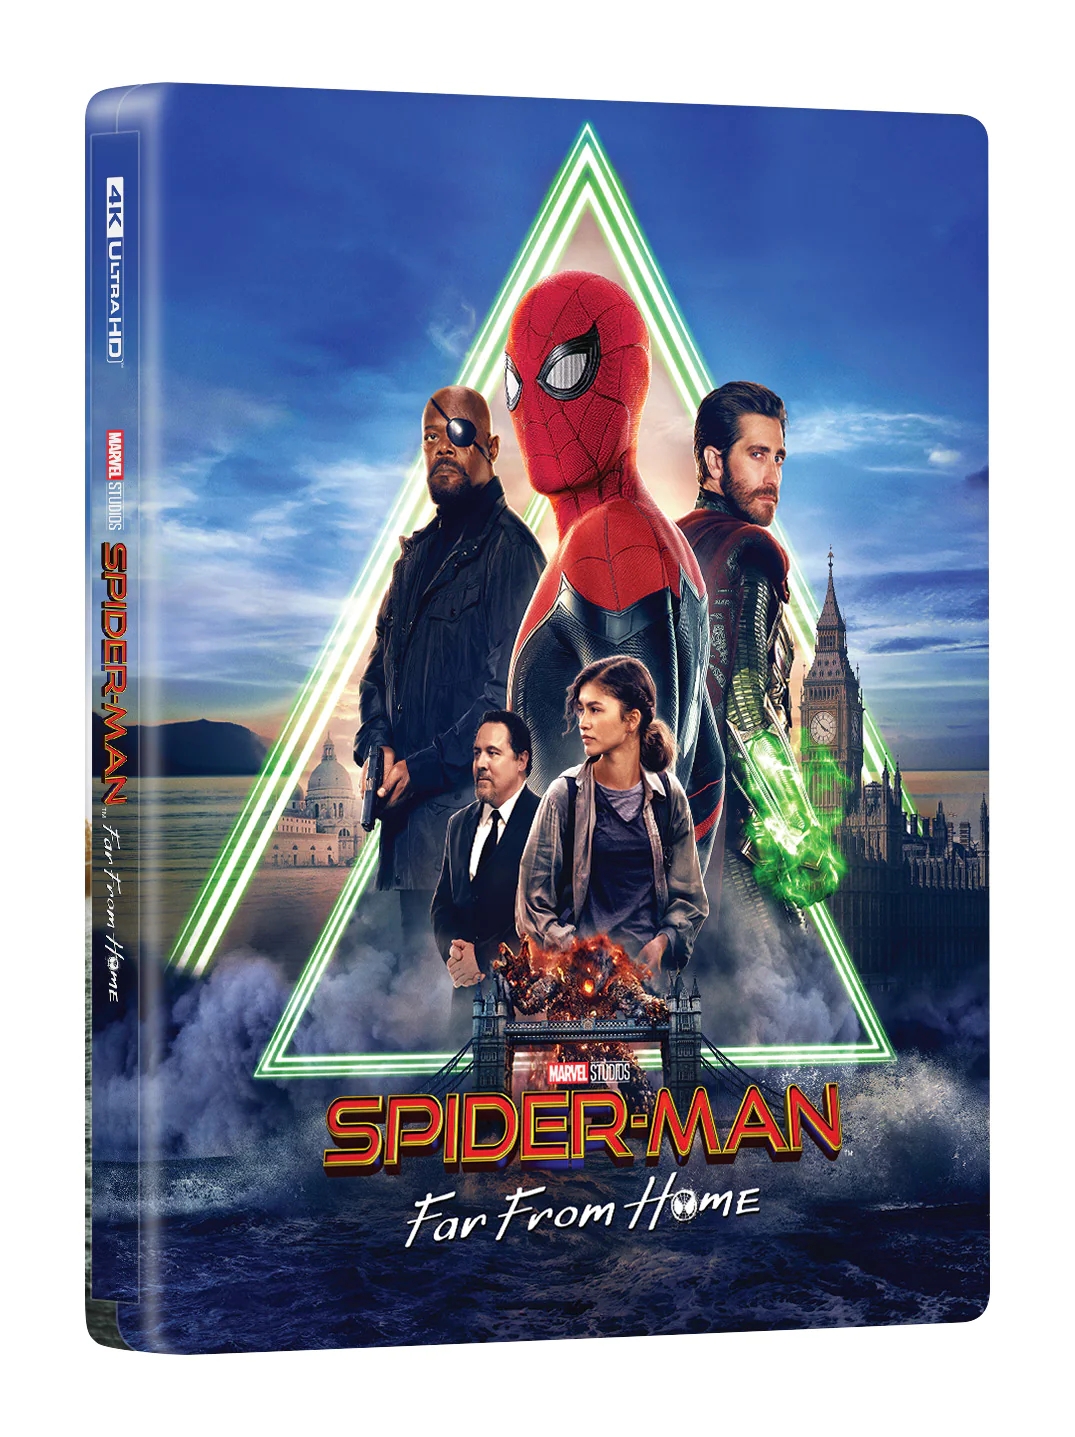 SpidermanFFH_steelbook_cover_5000x.jpg